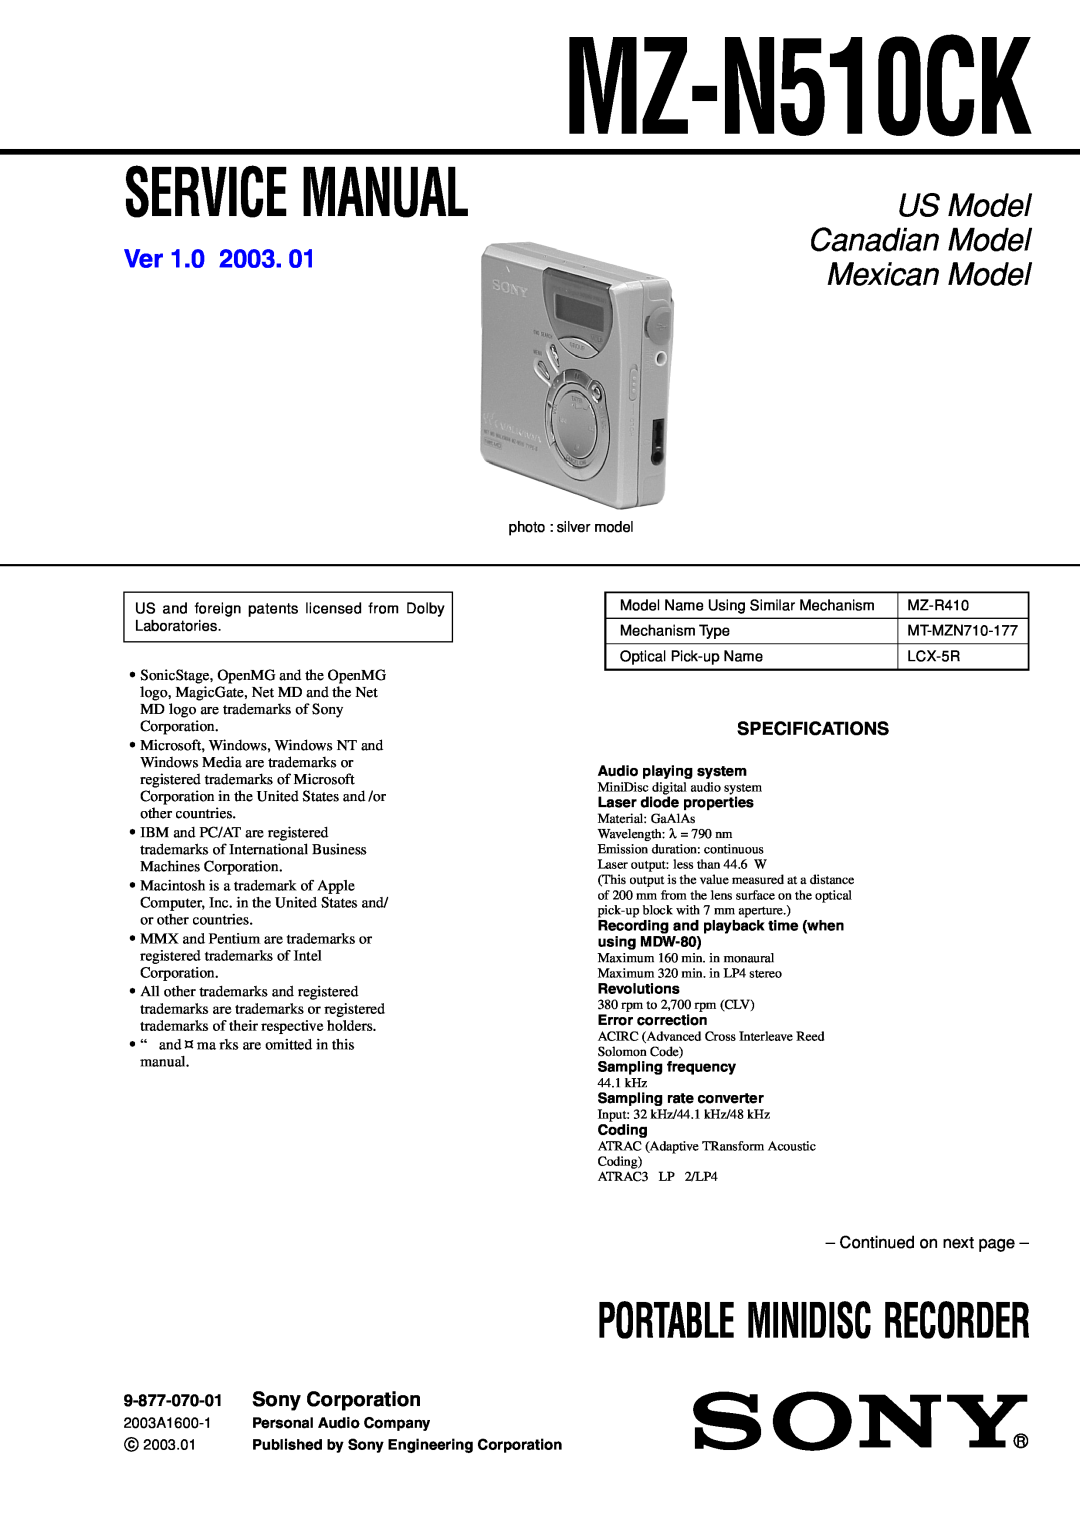 Sony MZ-N510CK service manual Portable Minidisc Recorder, US Model, Canadian Model, Mexican Model, Ver, Sony Corporation 